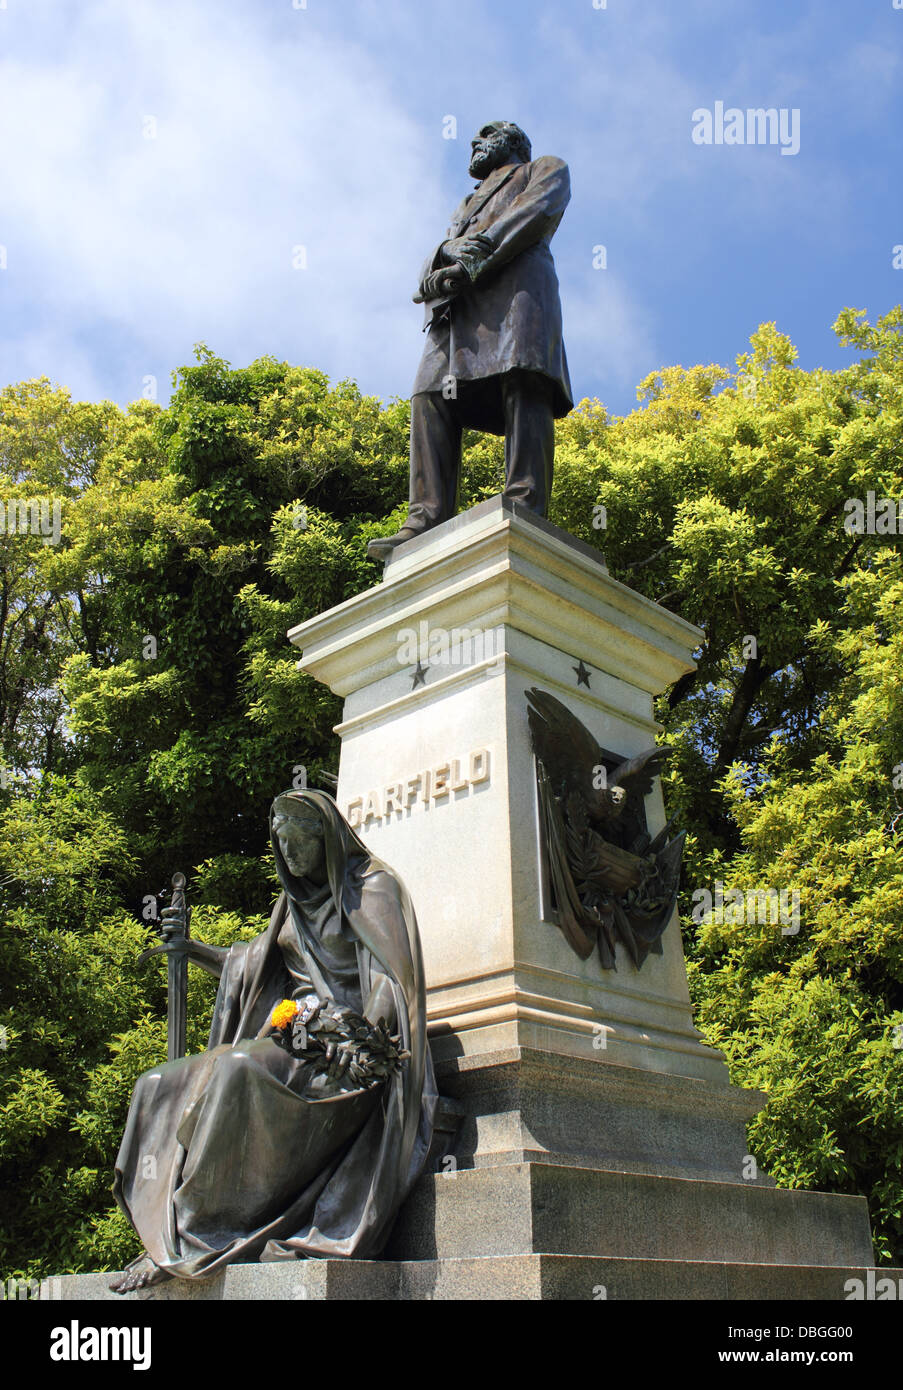 James Abram Garfield Monument, Golden Gate Park, San Francisco, California, USA Banque D'Images